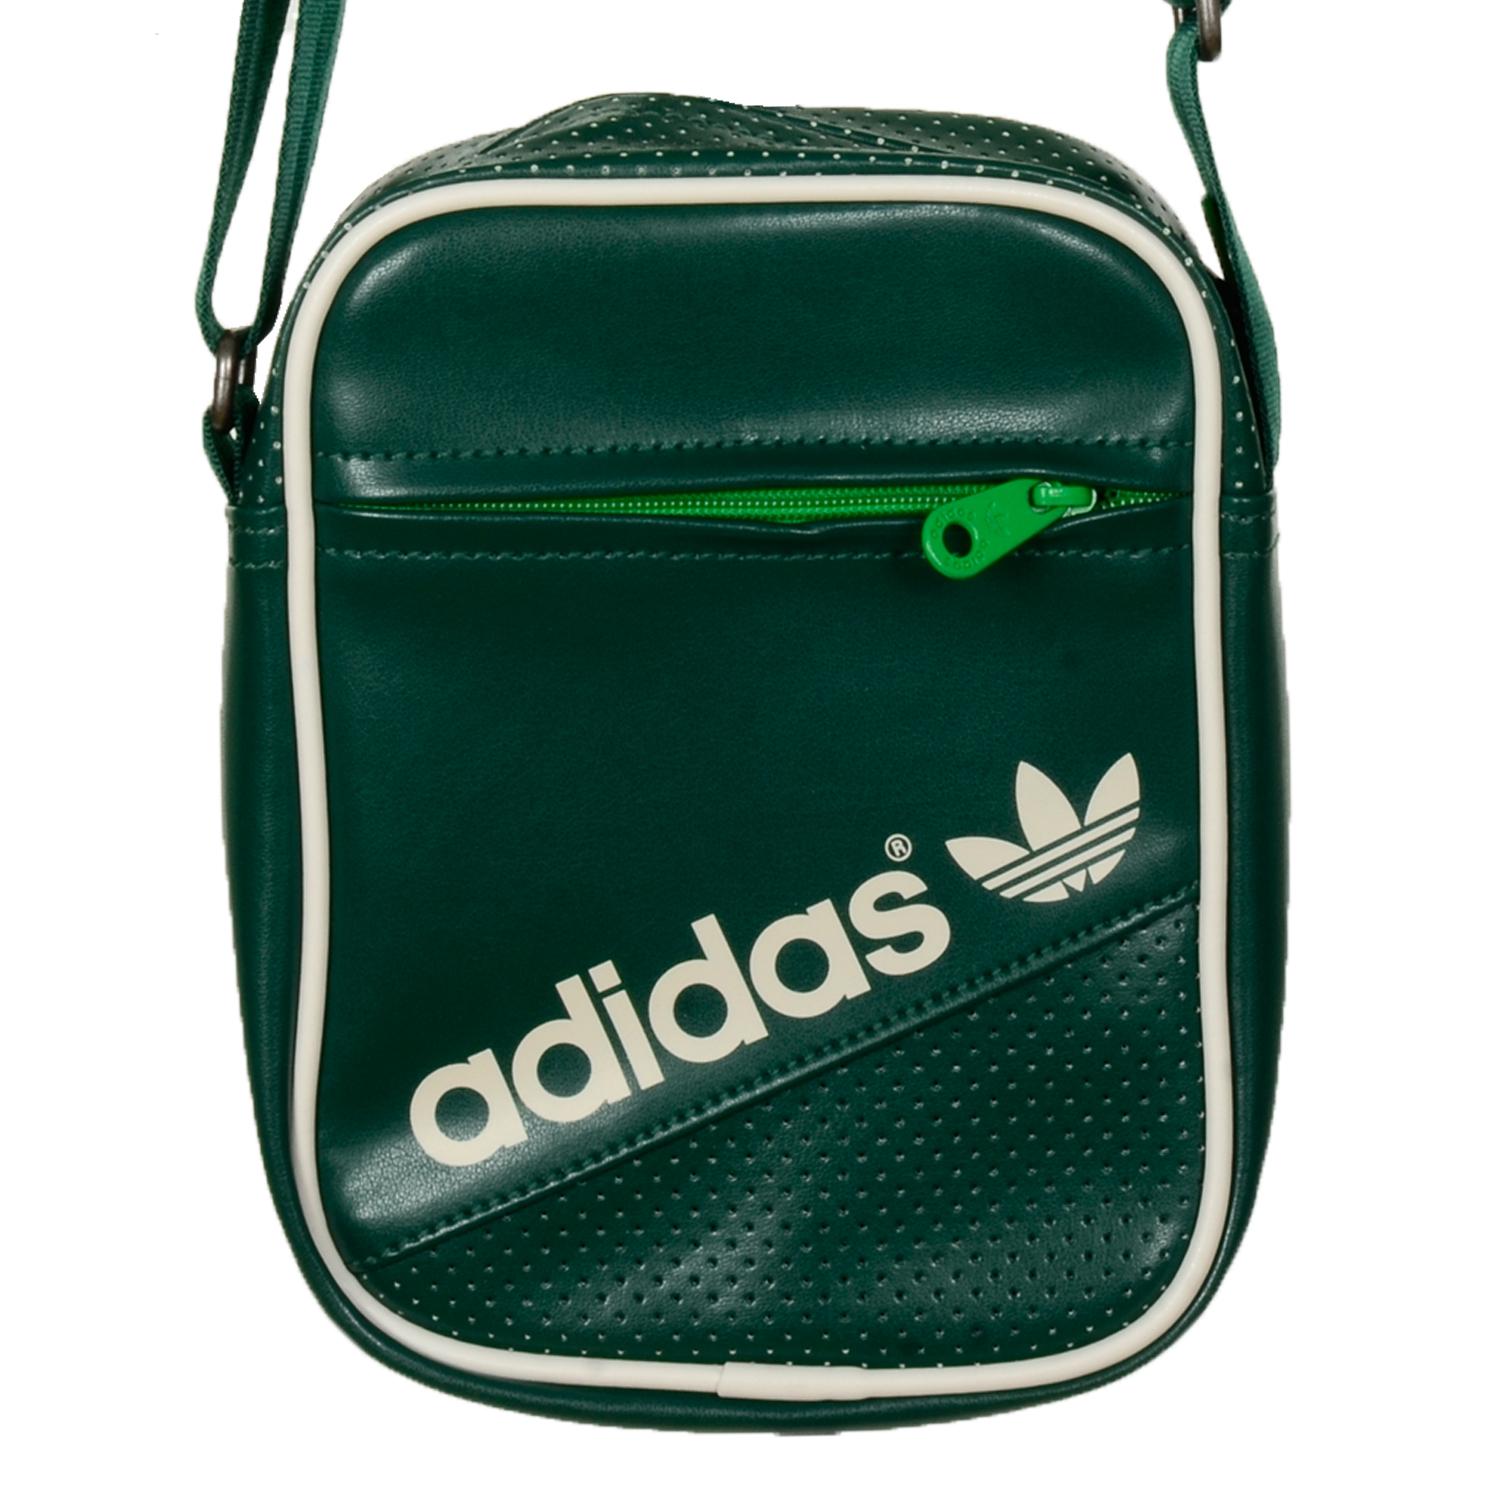 Foto Adidas Minibag Perforated Bolsillos Verde foto 959933